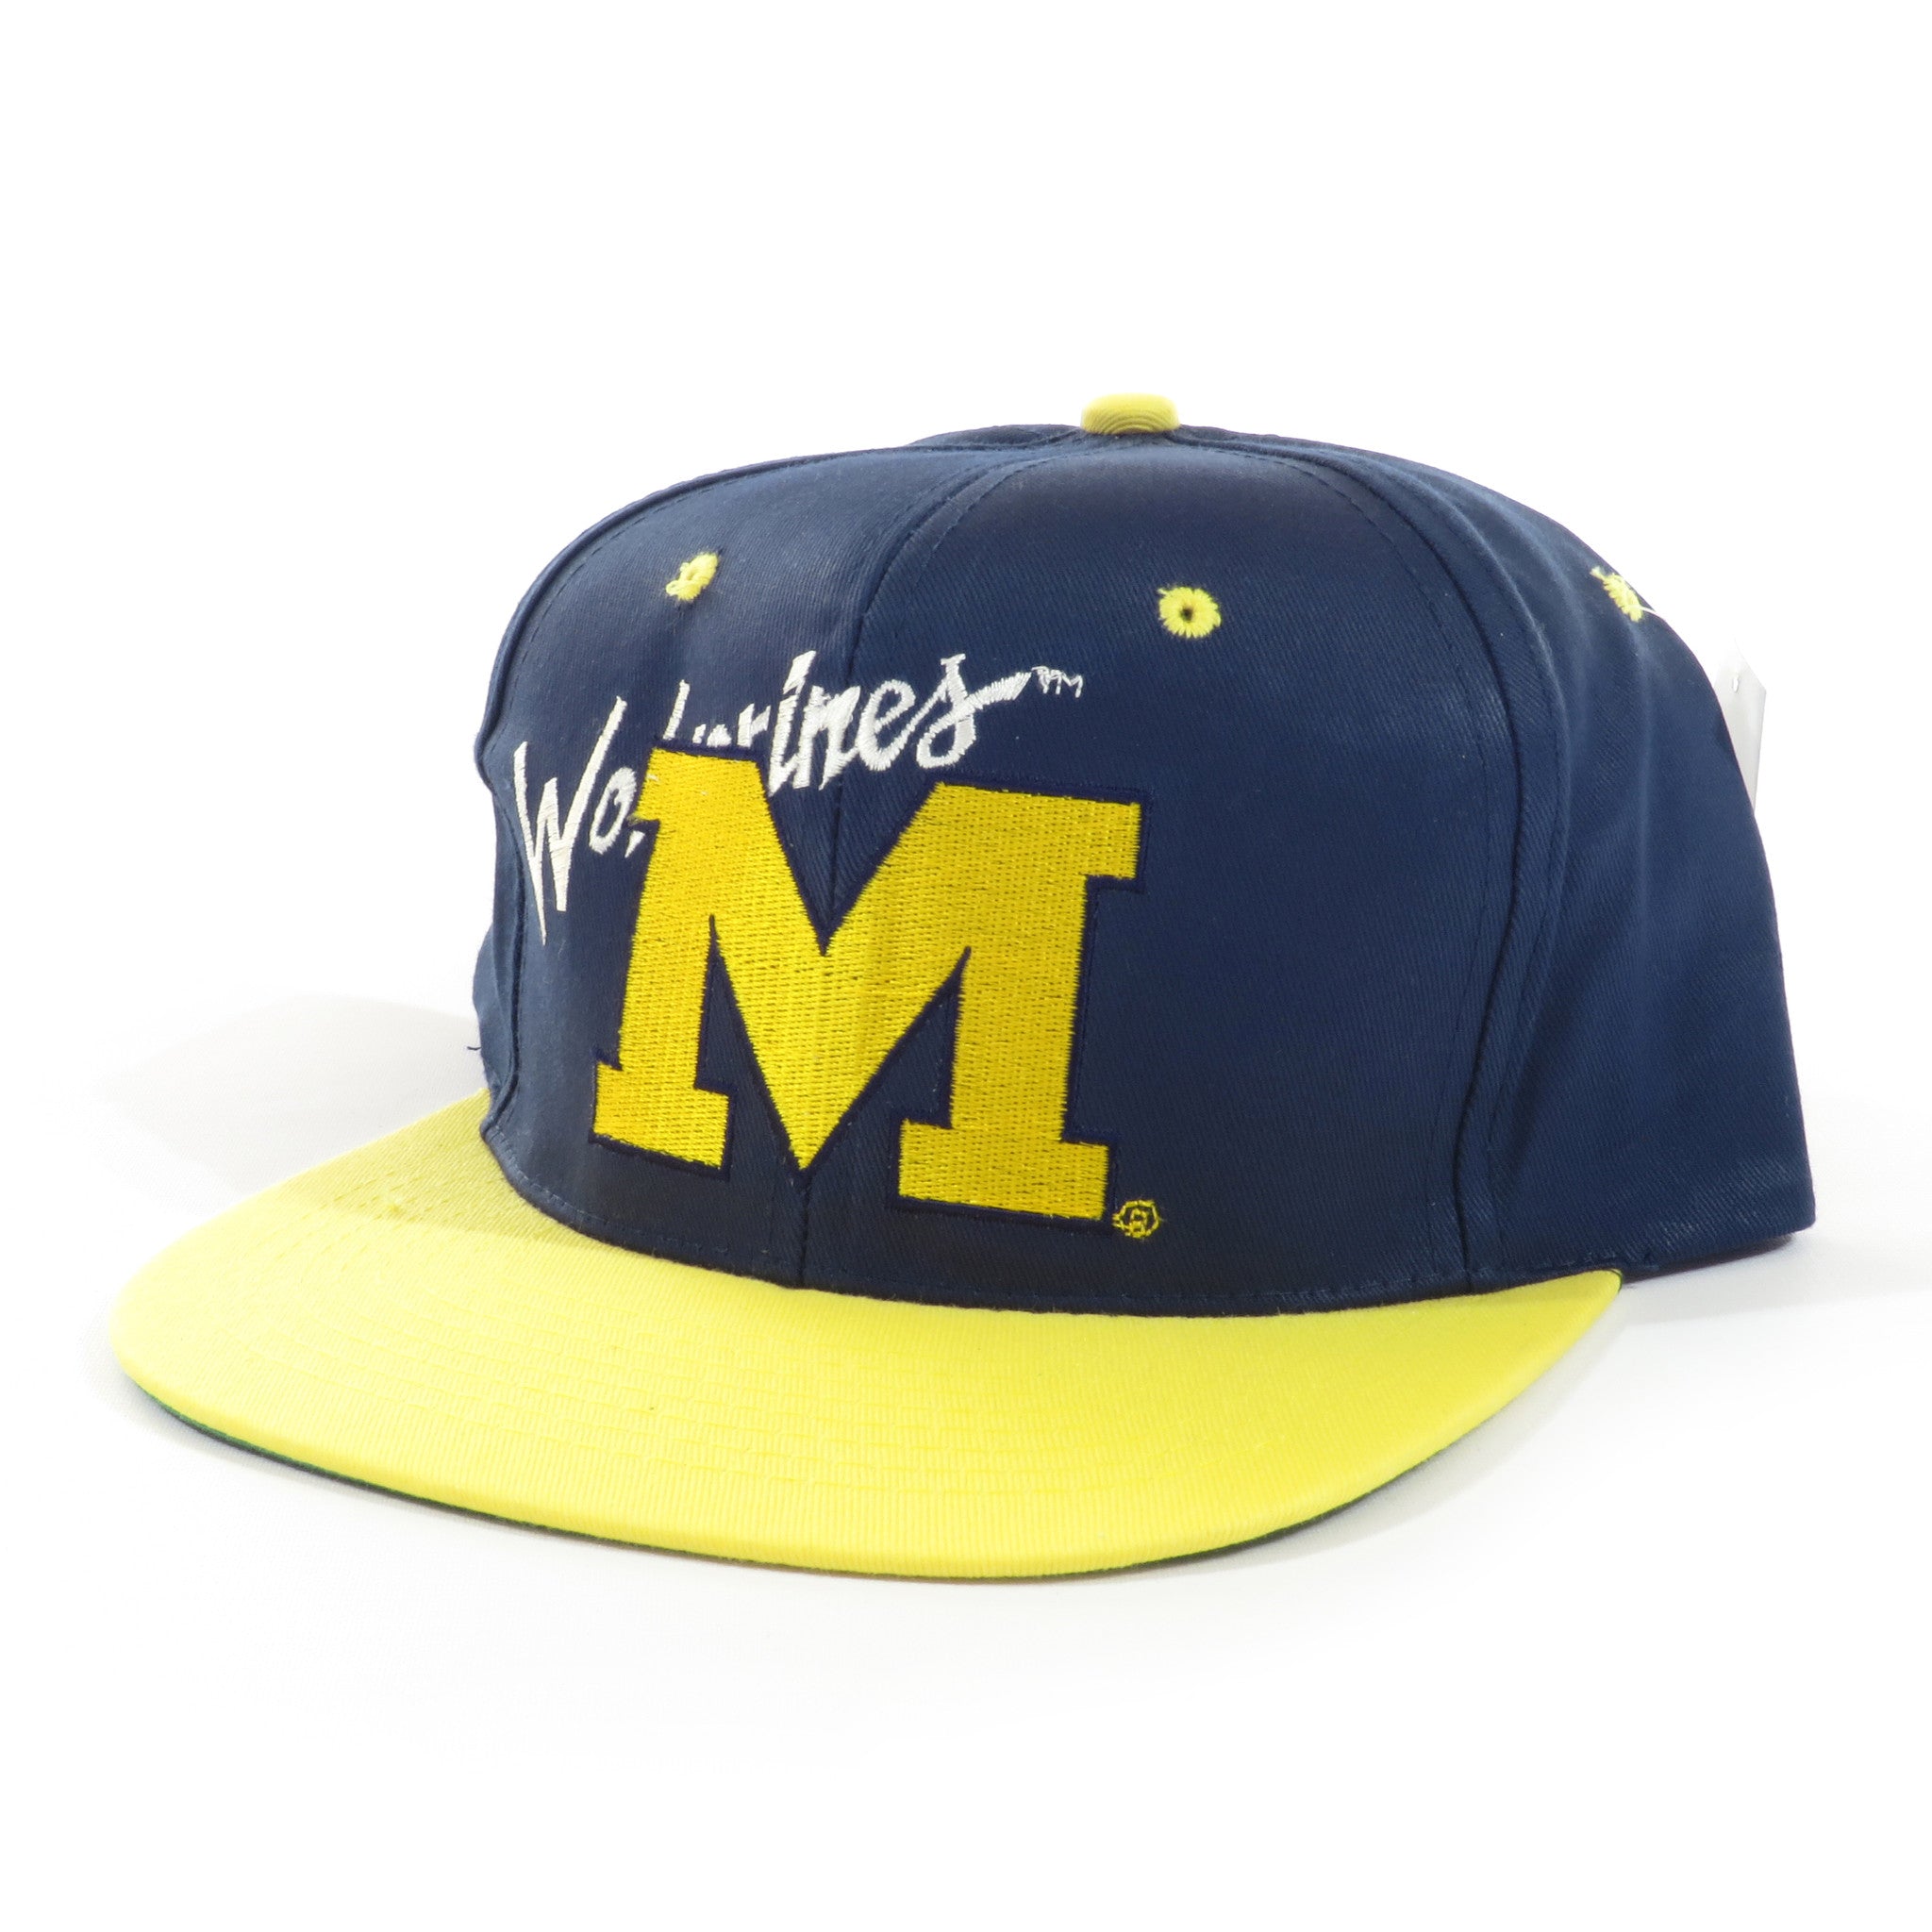 Michigan Wolverines Snapback Hat